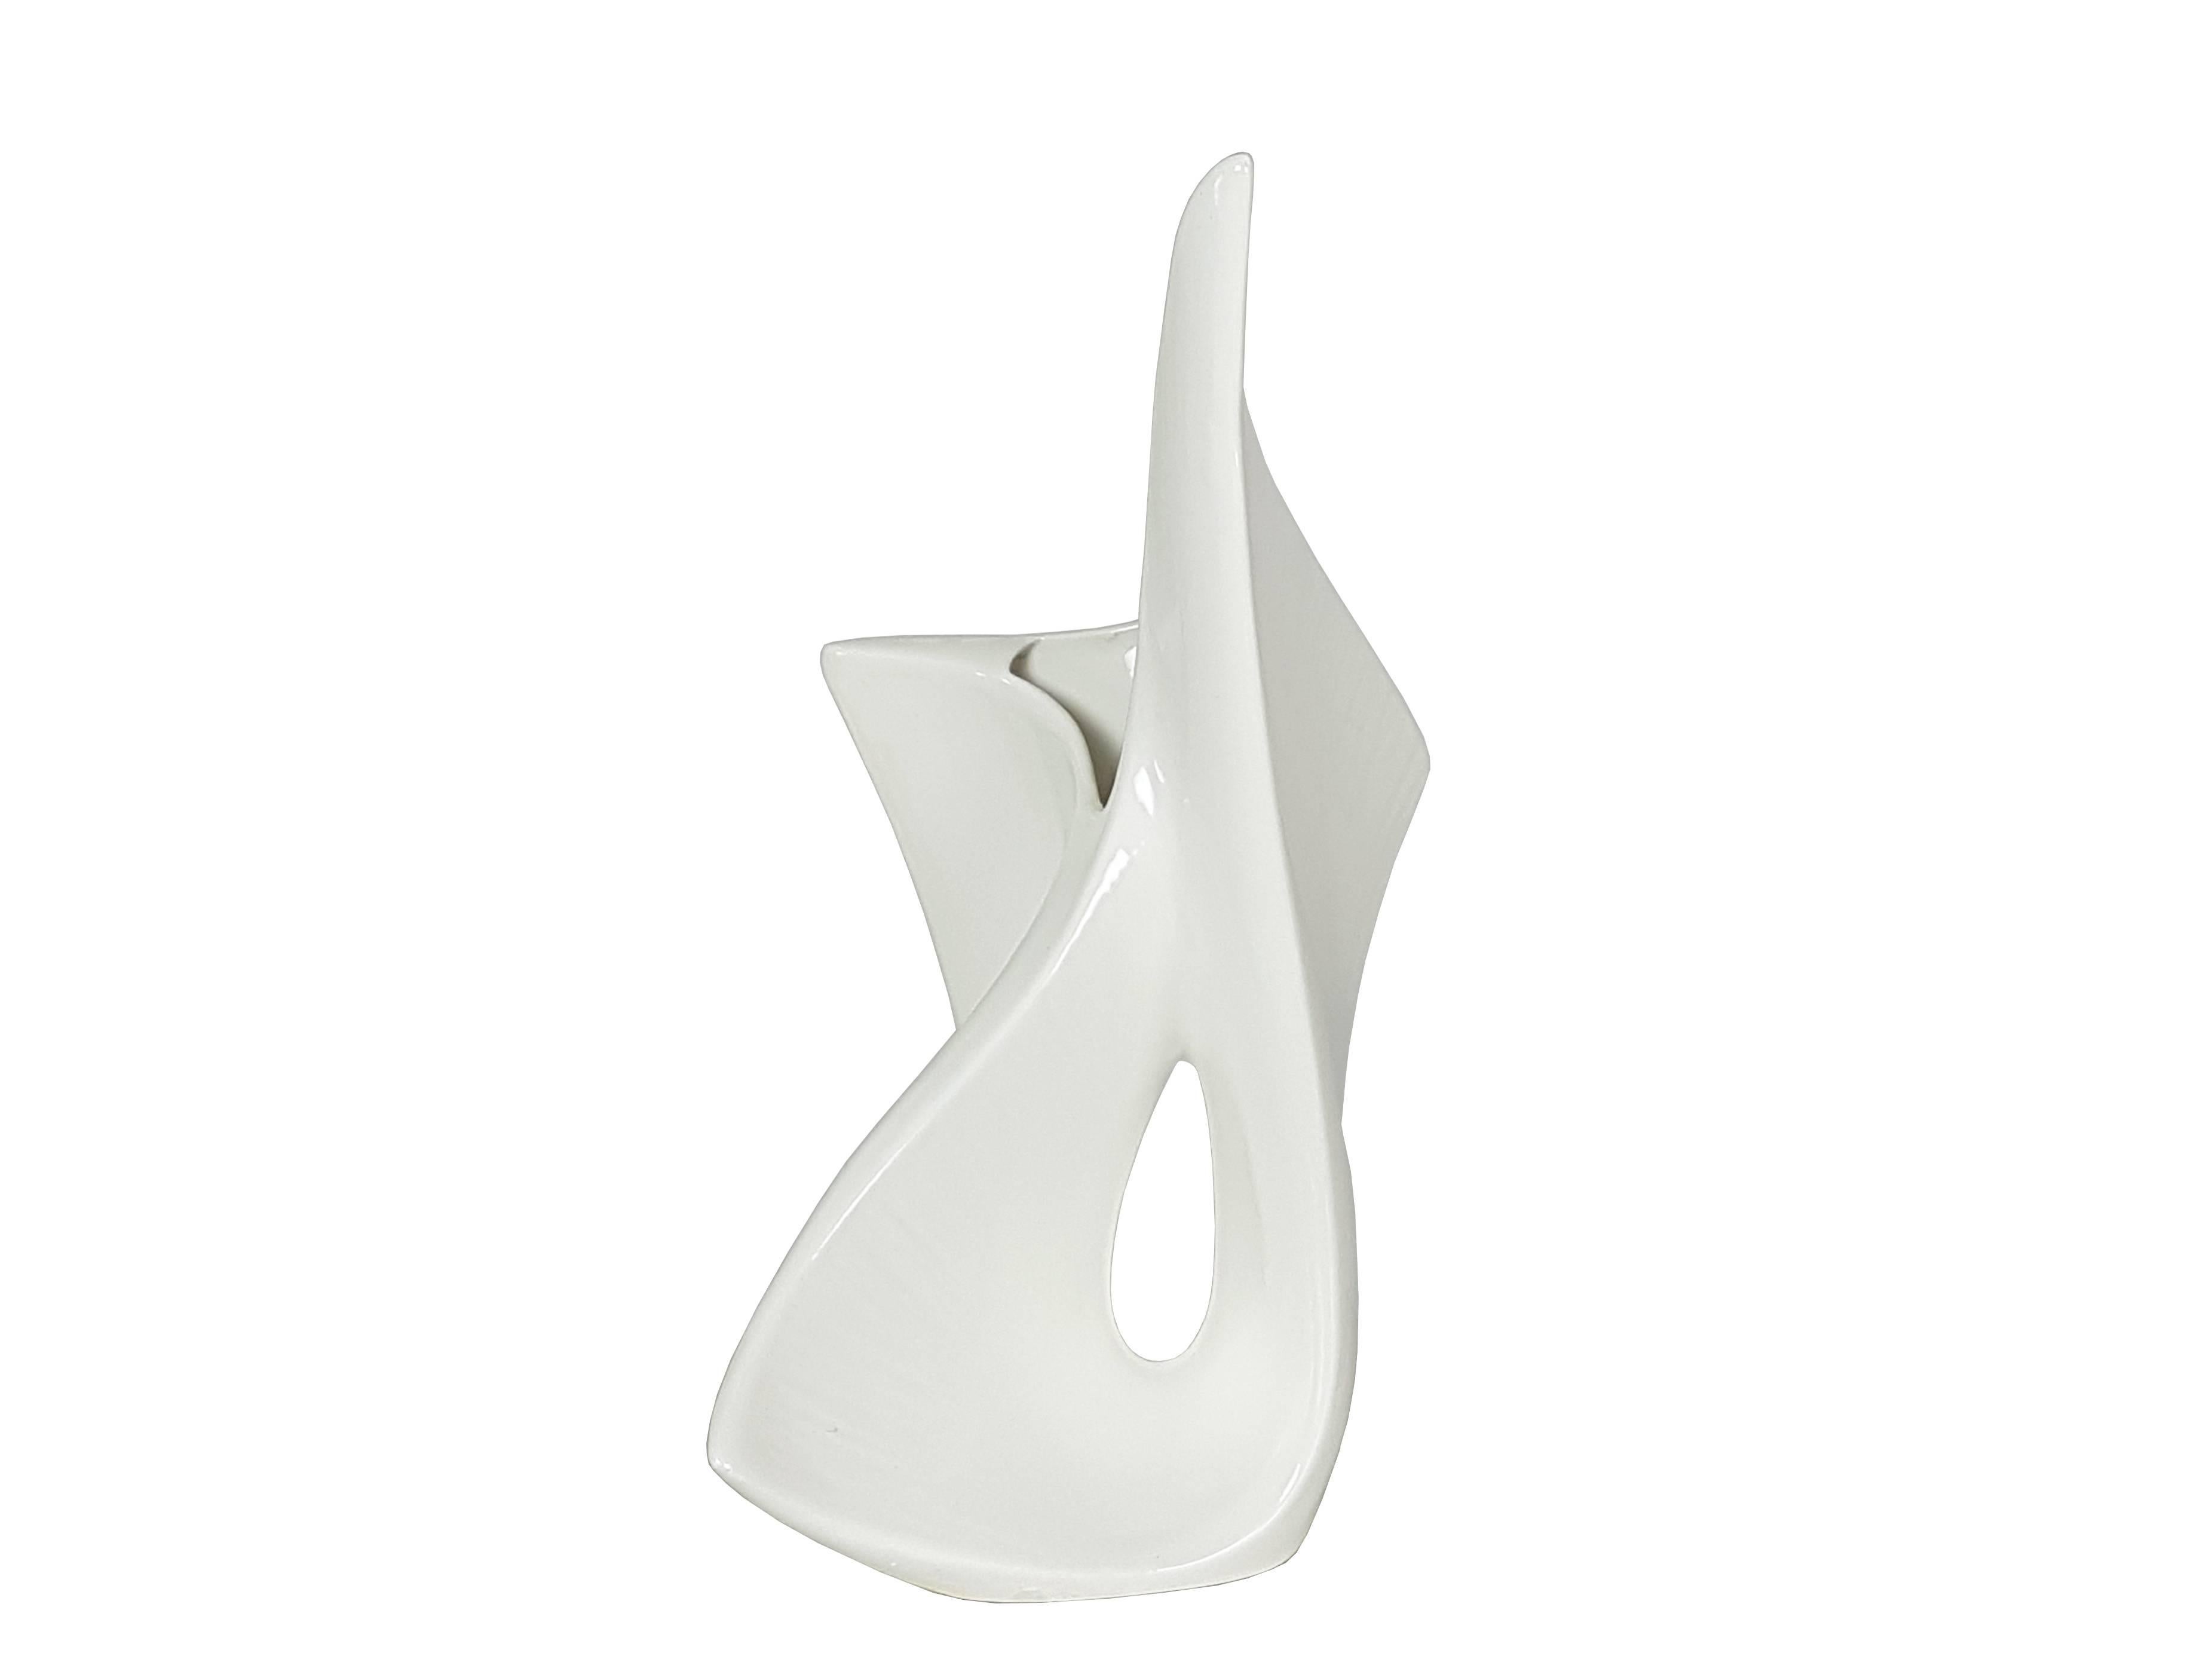 Glazed Italian Sculptural White Ceramic Vase from Vibi, 1950s For Sale